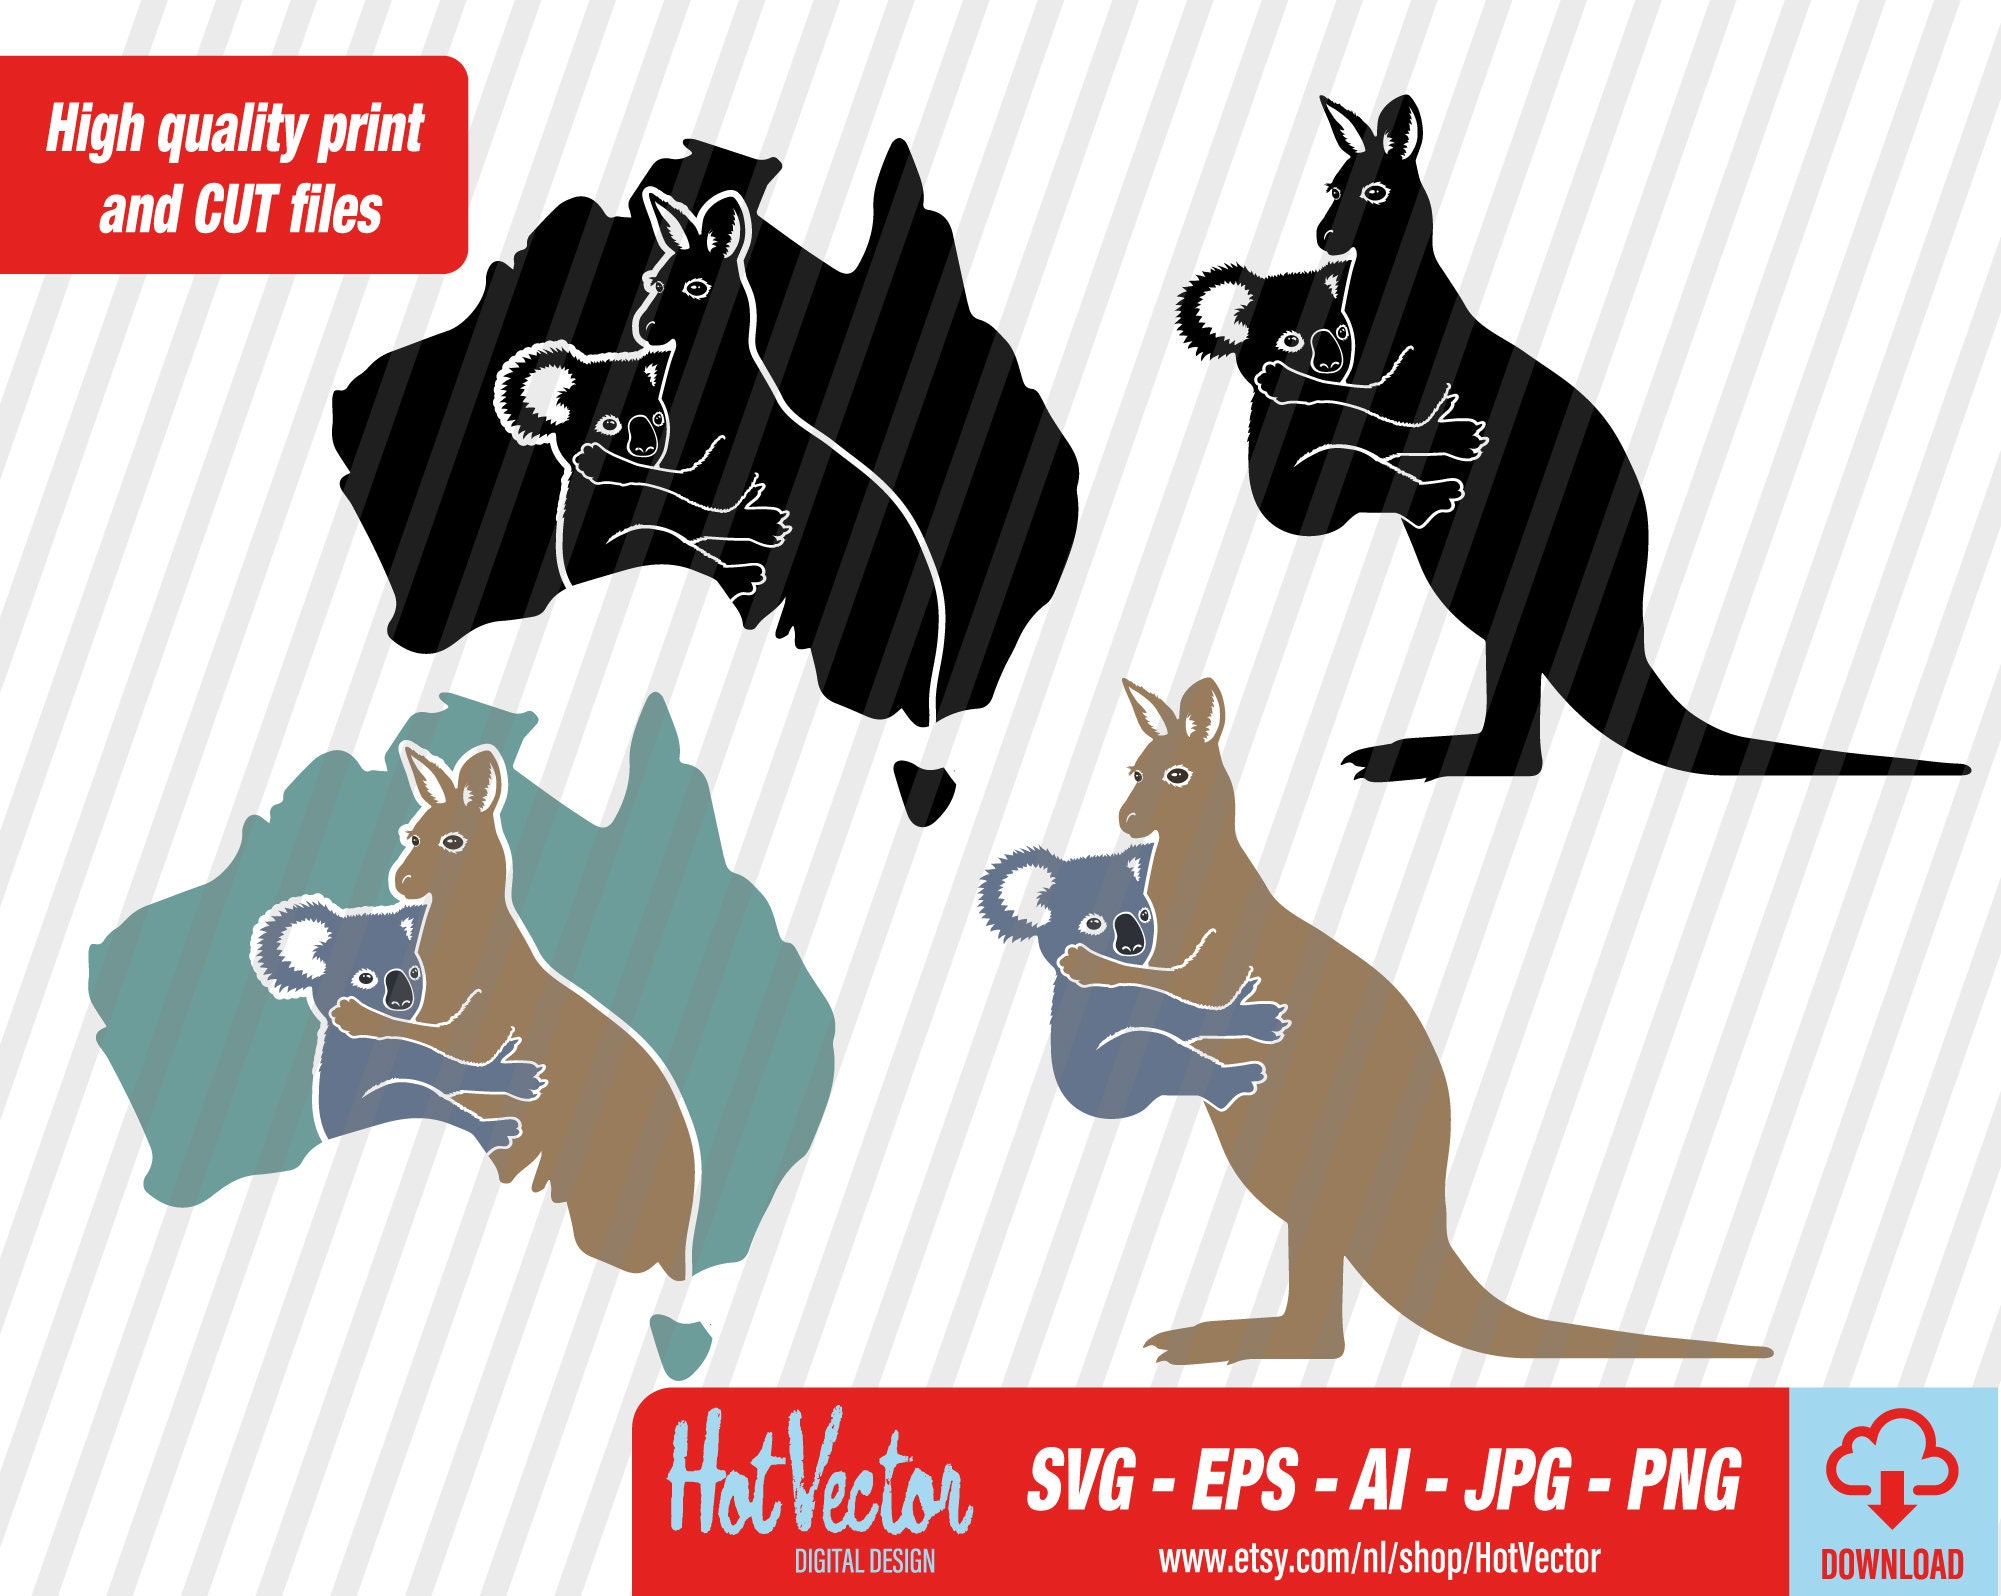 Download Svg Kangaroo Wombat Australian Animal Faces Digital Stamps Adobe Illustrator File Koala Craft Supplies Tools Materials Deshpandefoundationindia Org